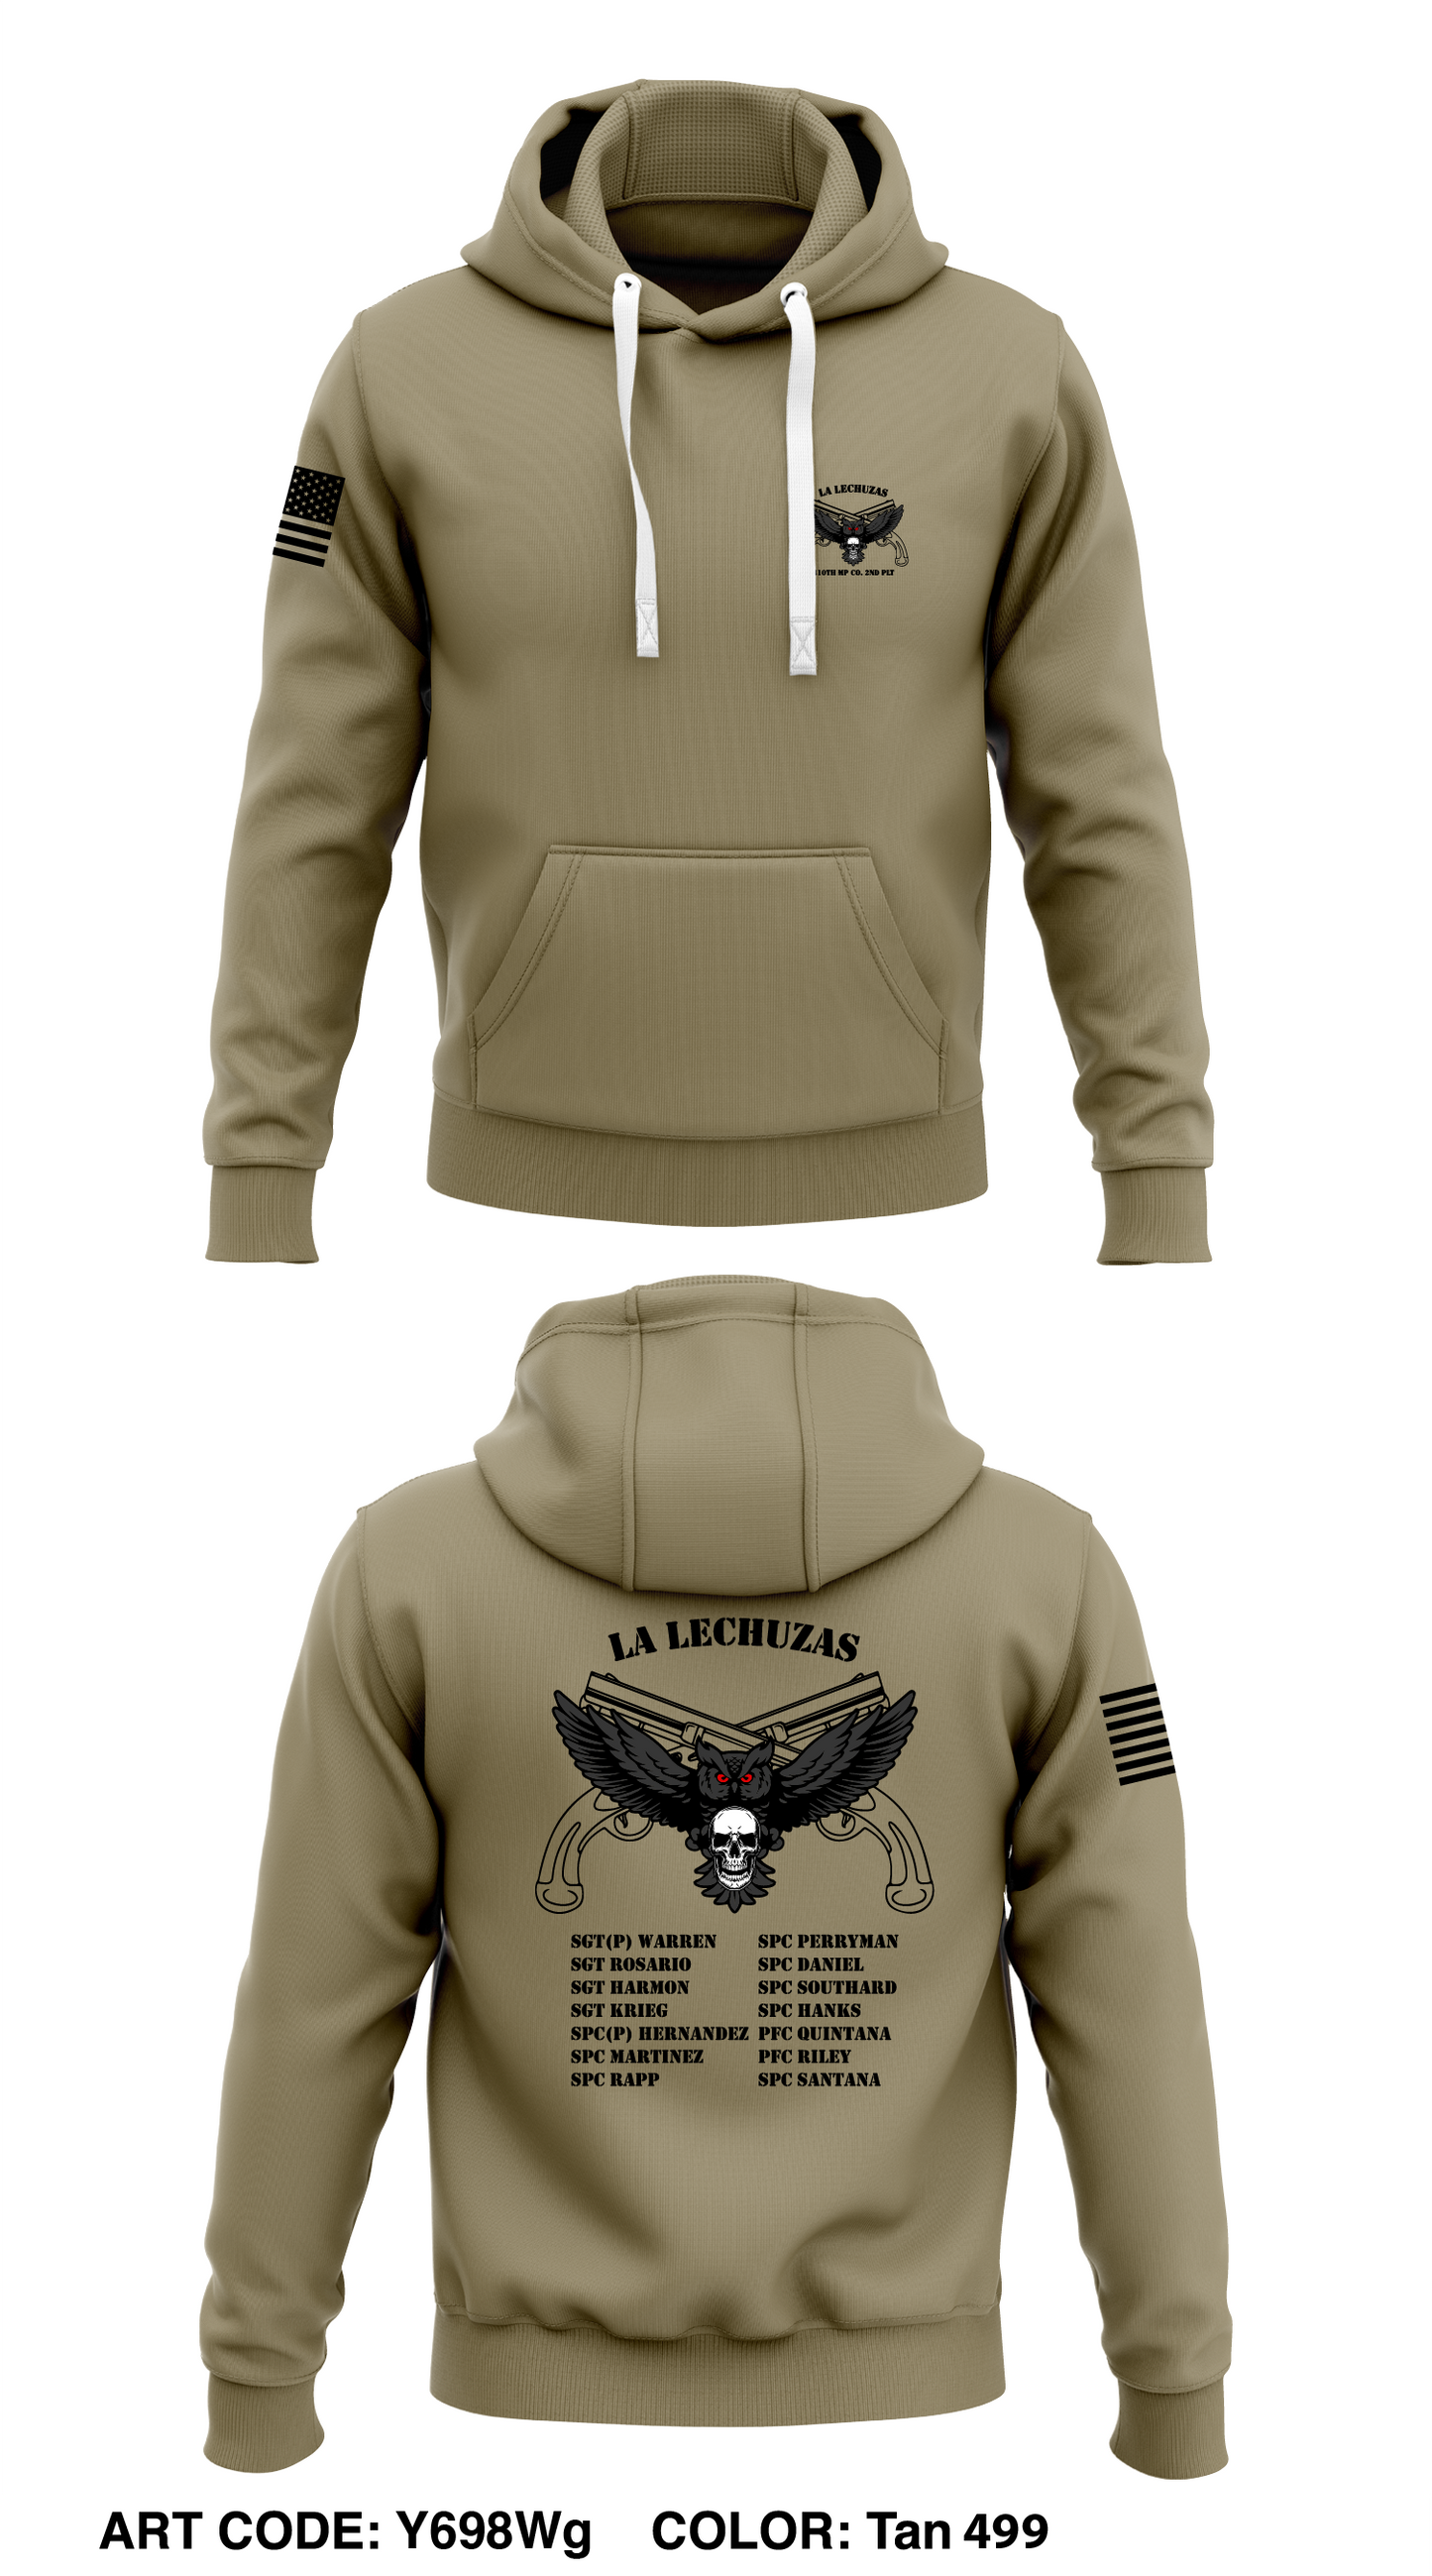 41th MP Co. 2nd PLT, La Lechuza Squad Store 1  Core Men's Hooded Performance Sweatshirt - Y698Wg